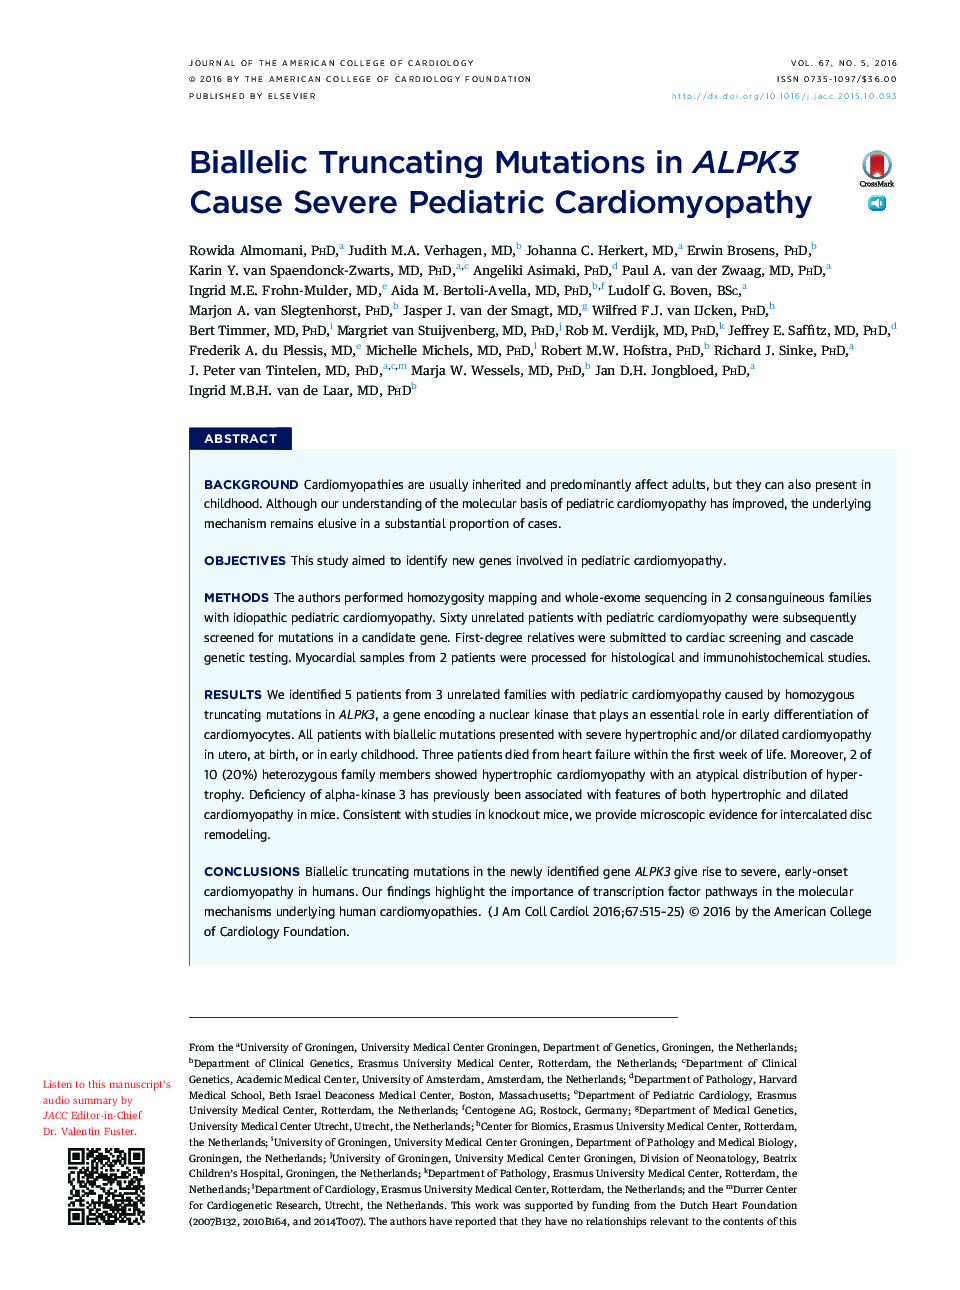 Biallelic Truncating Mutations in ALPK3 Cause Severe Pediatric Cardiomyopathy